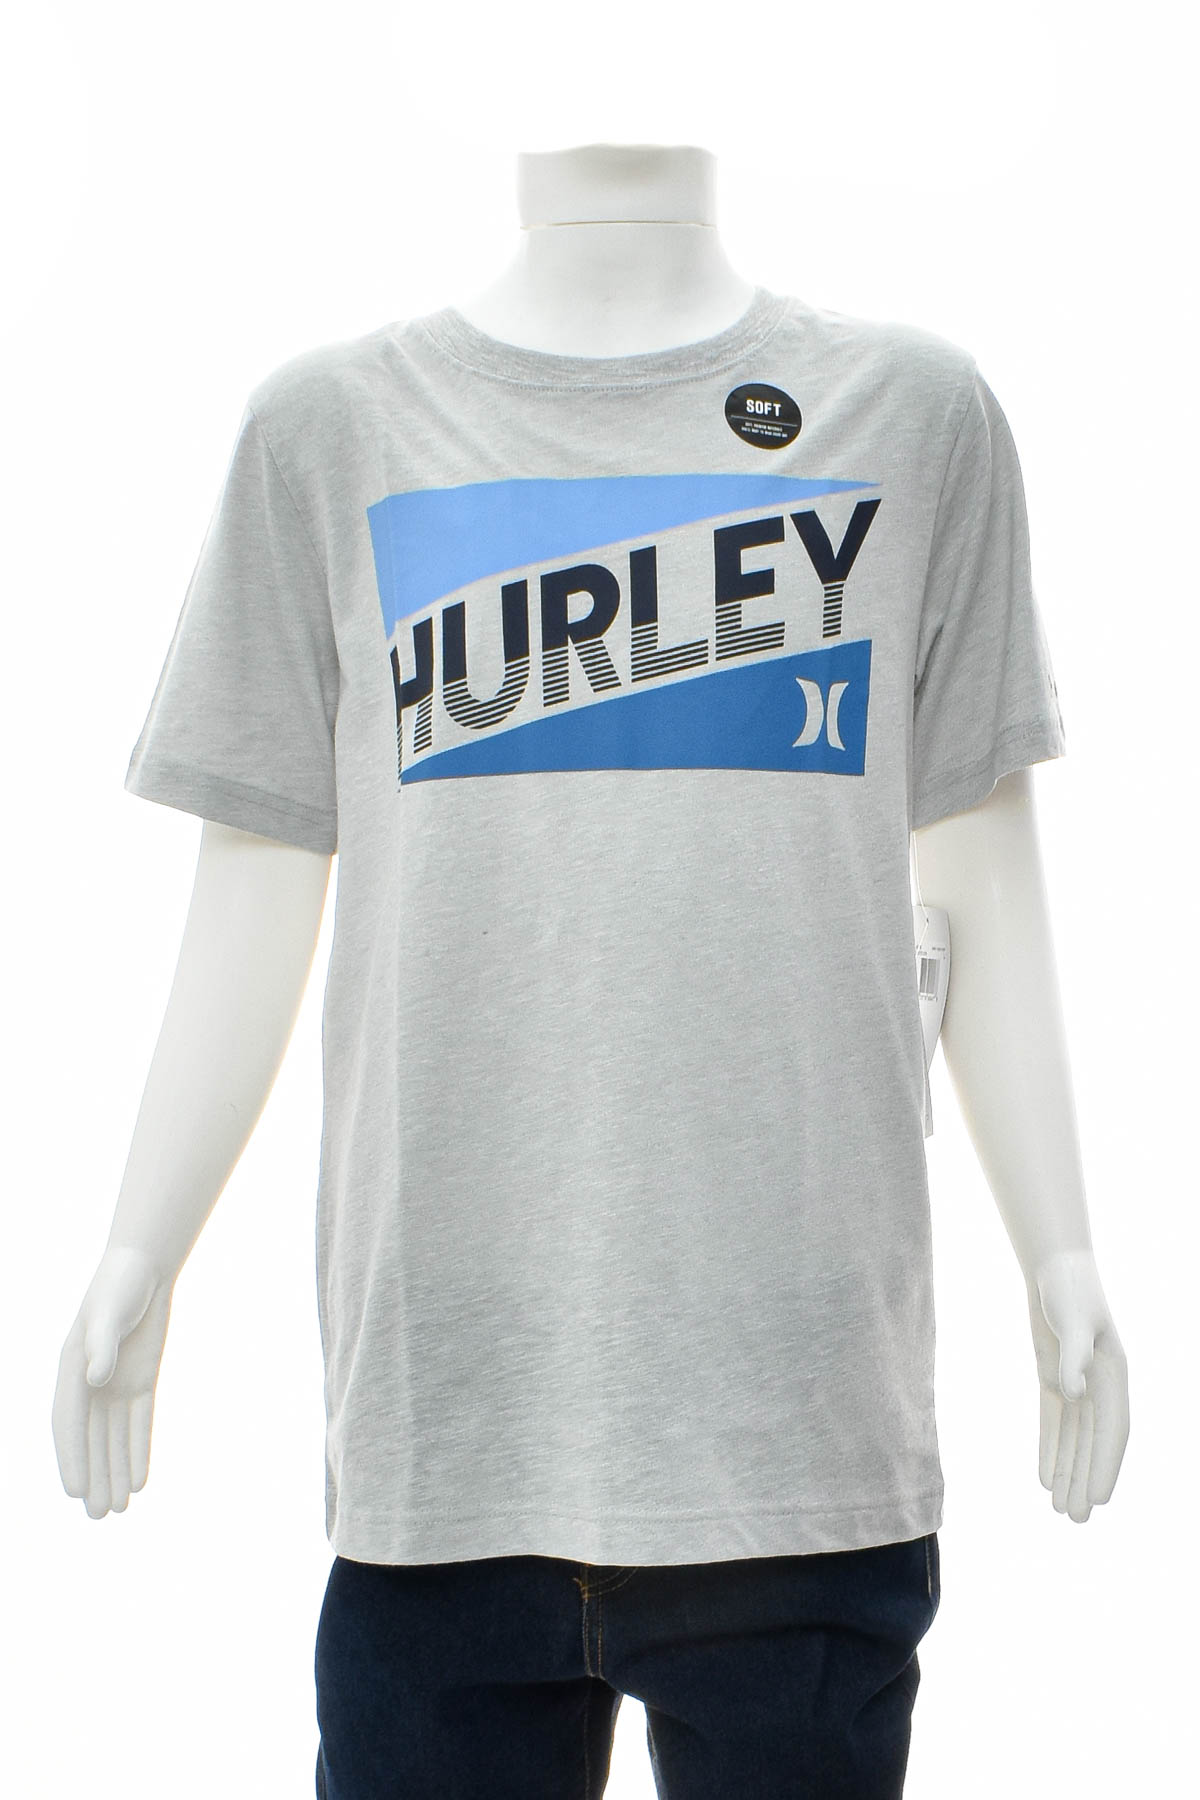 Boy's t-shirt - Hurley - 0